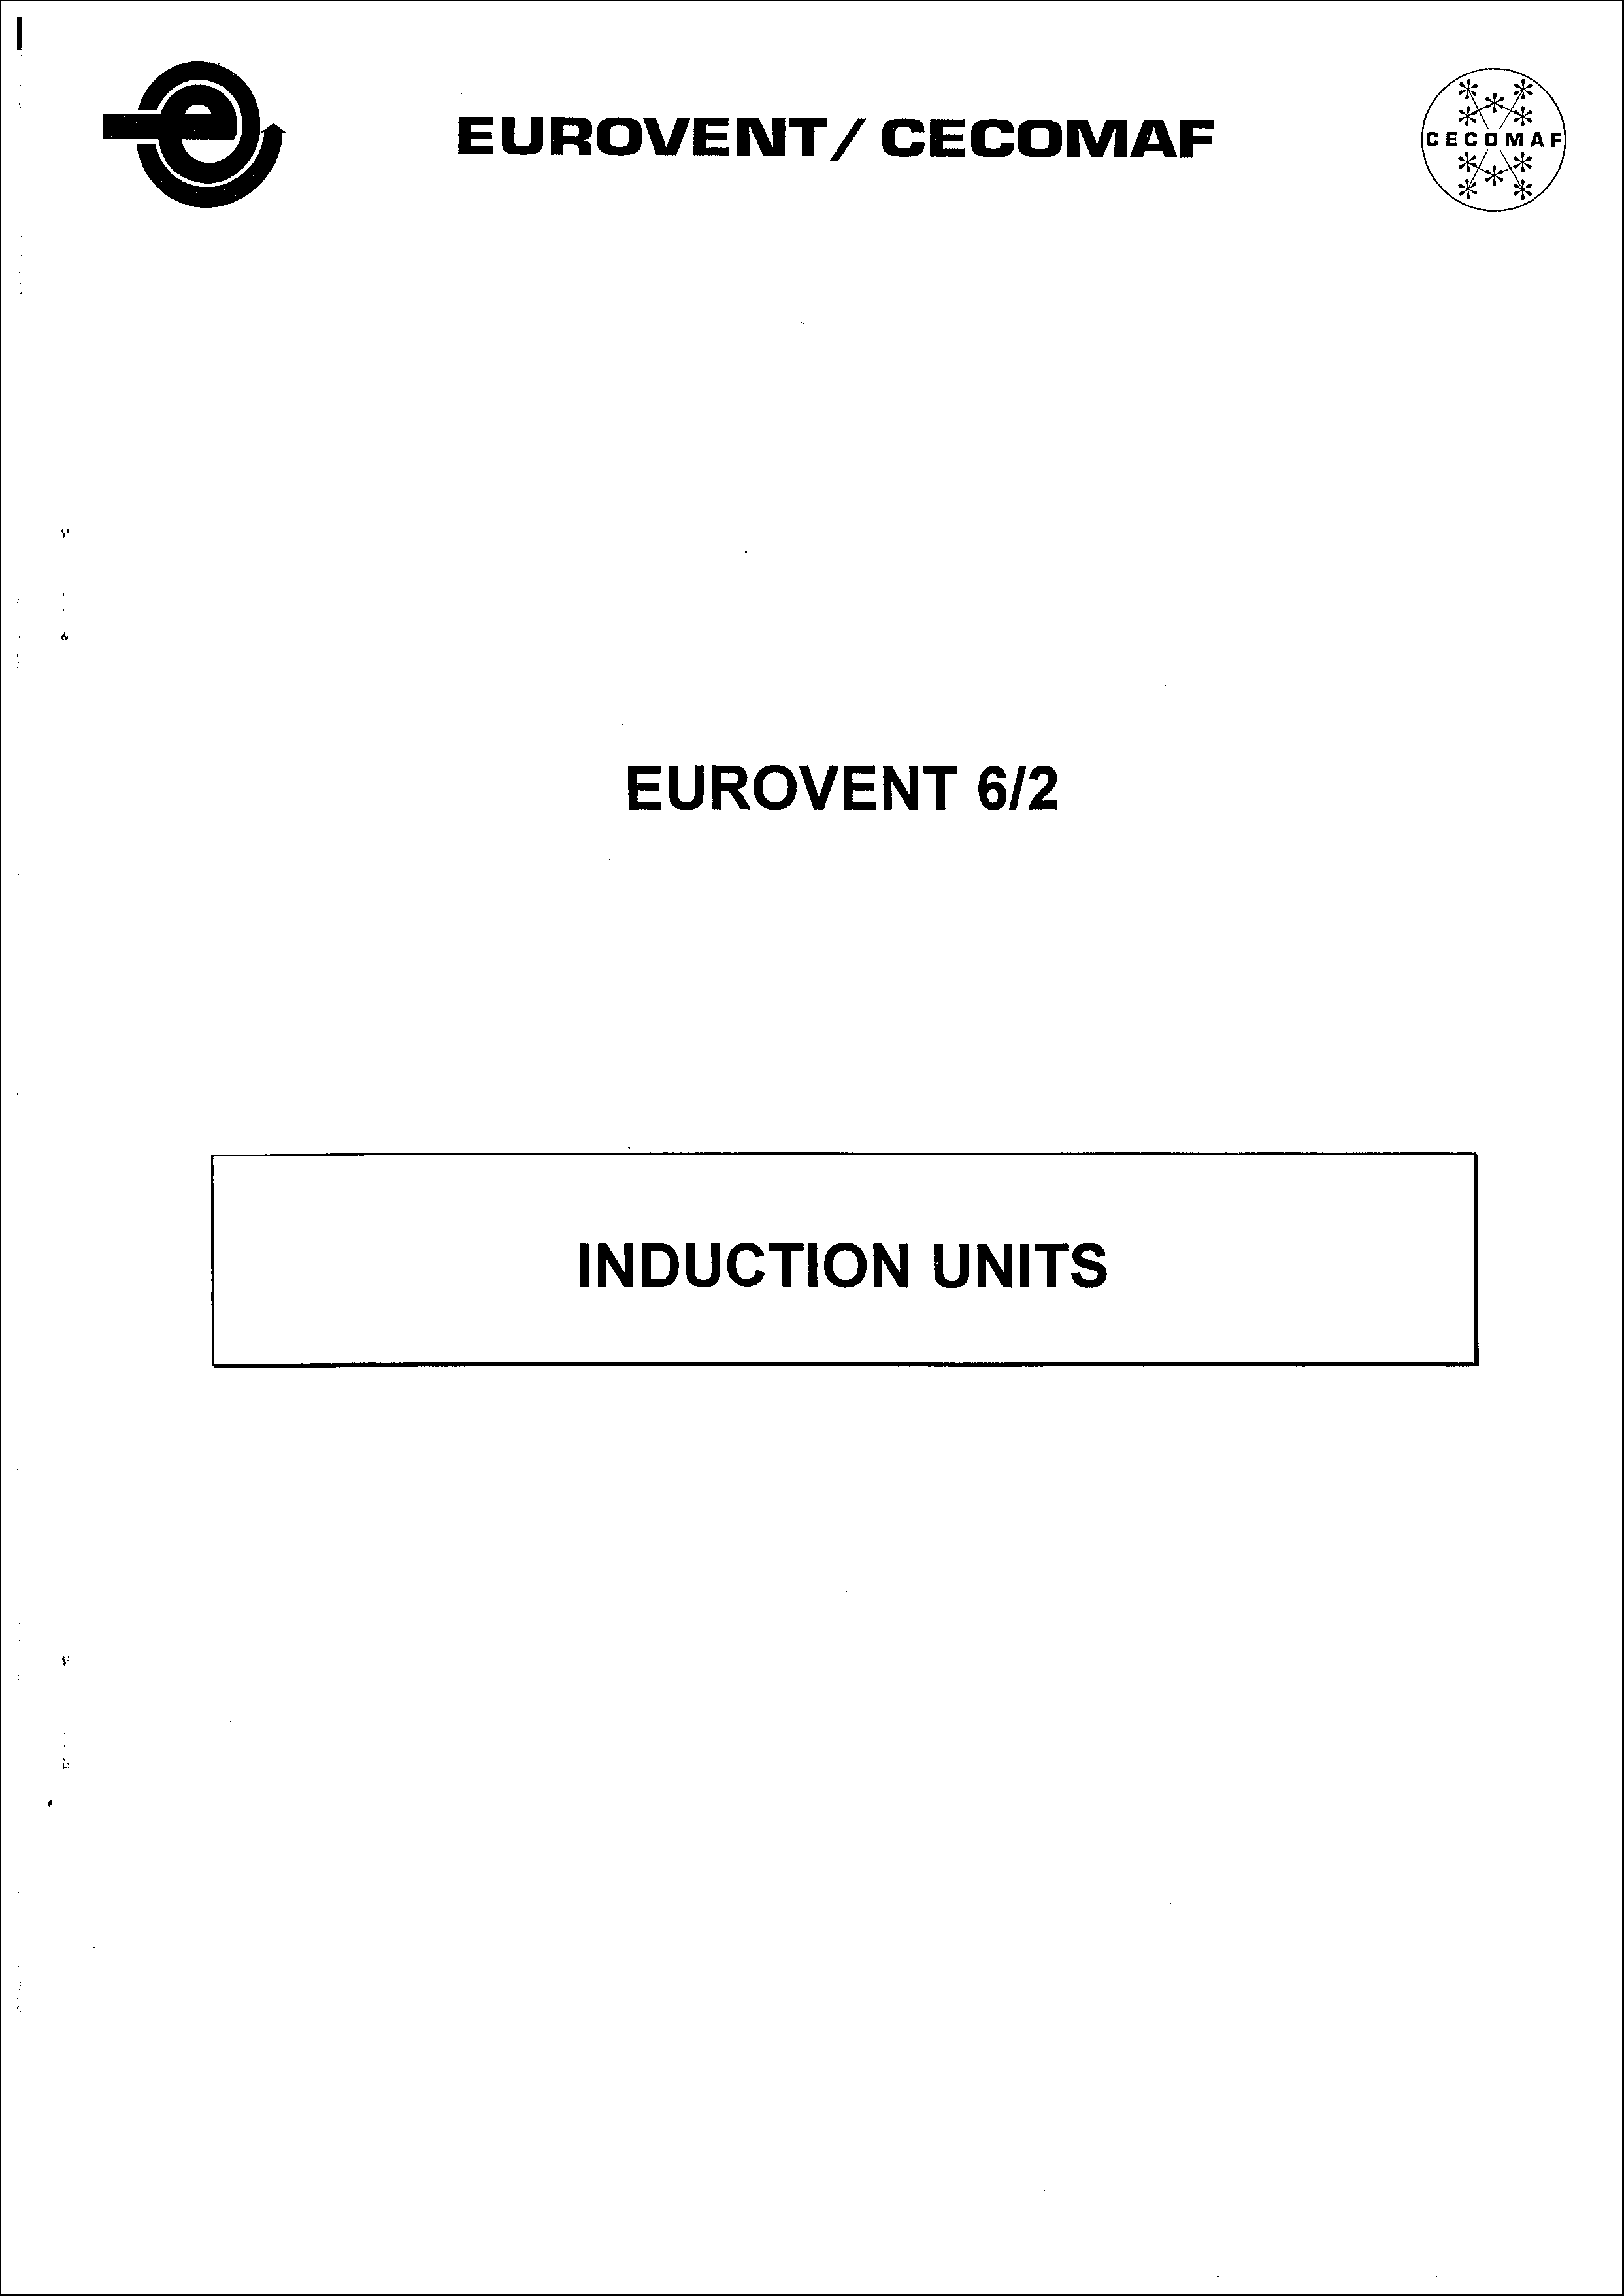 1973 - Induction units